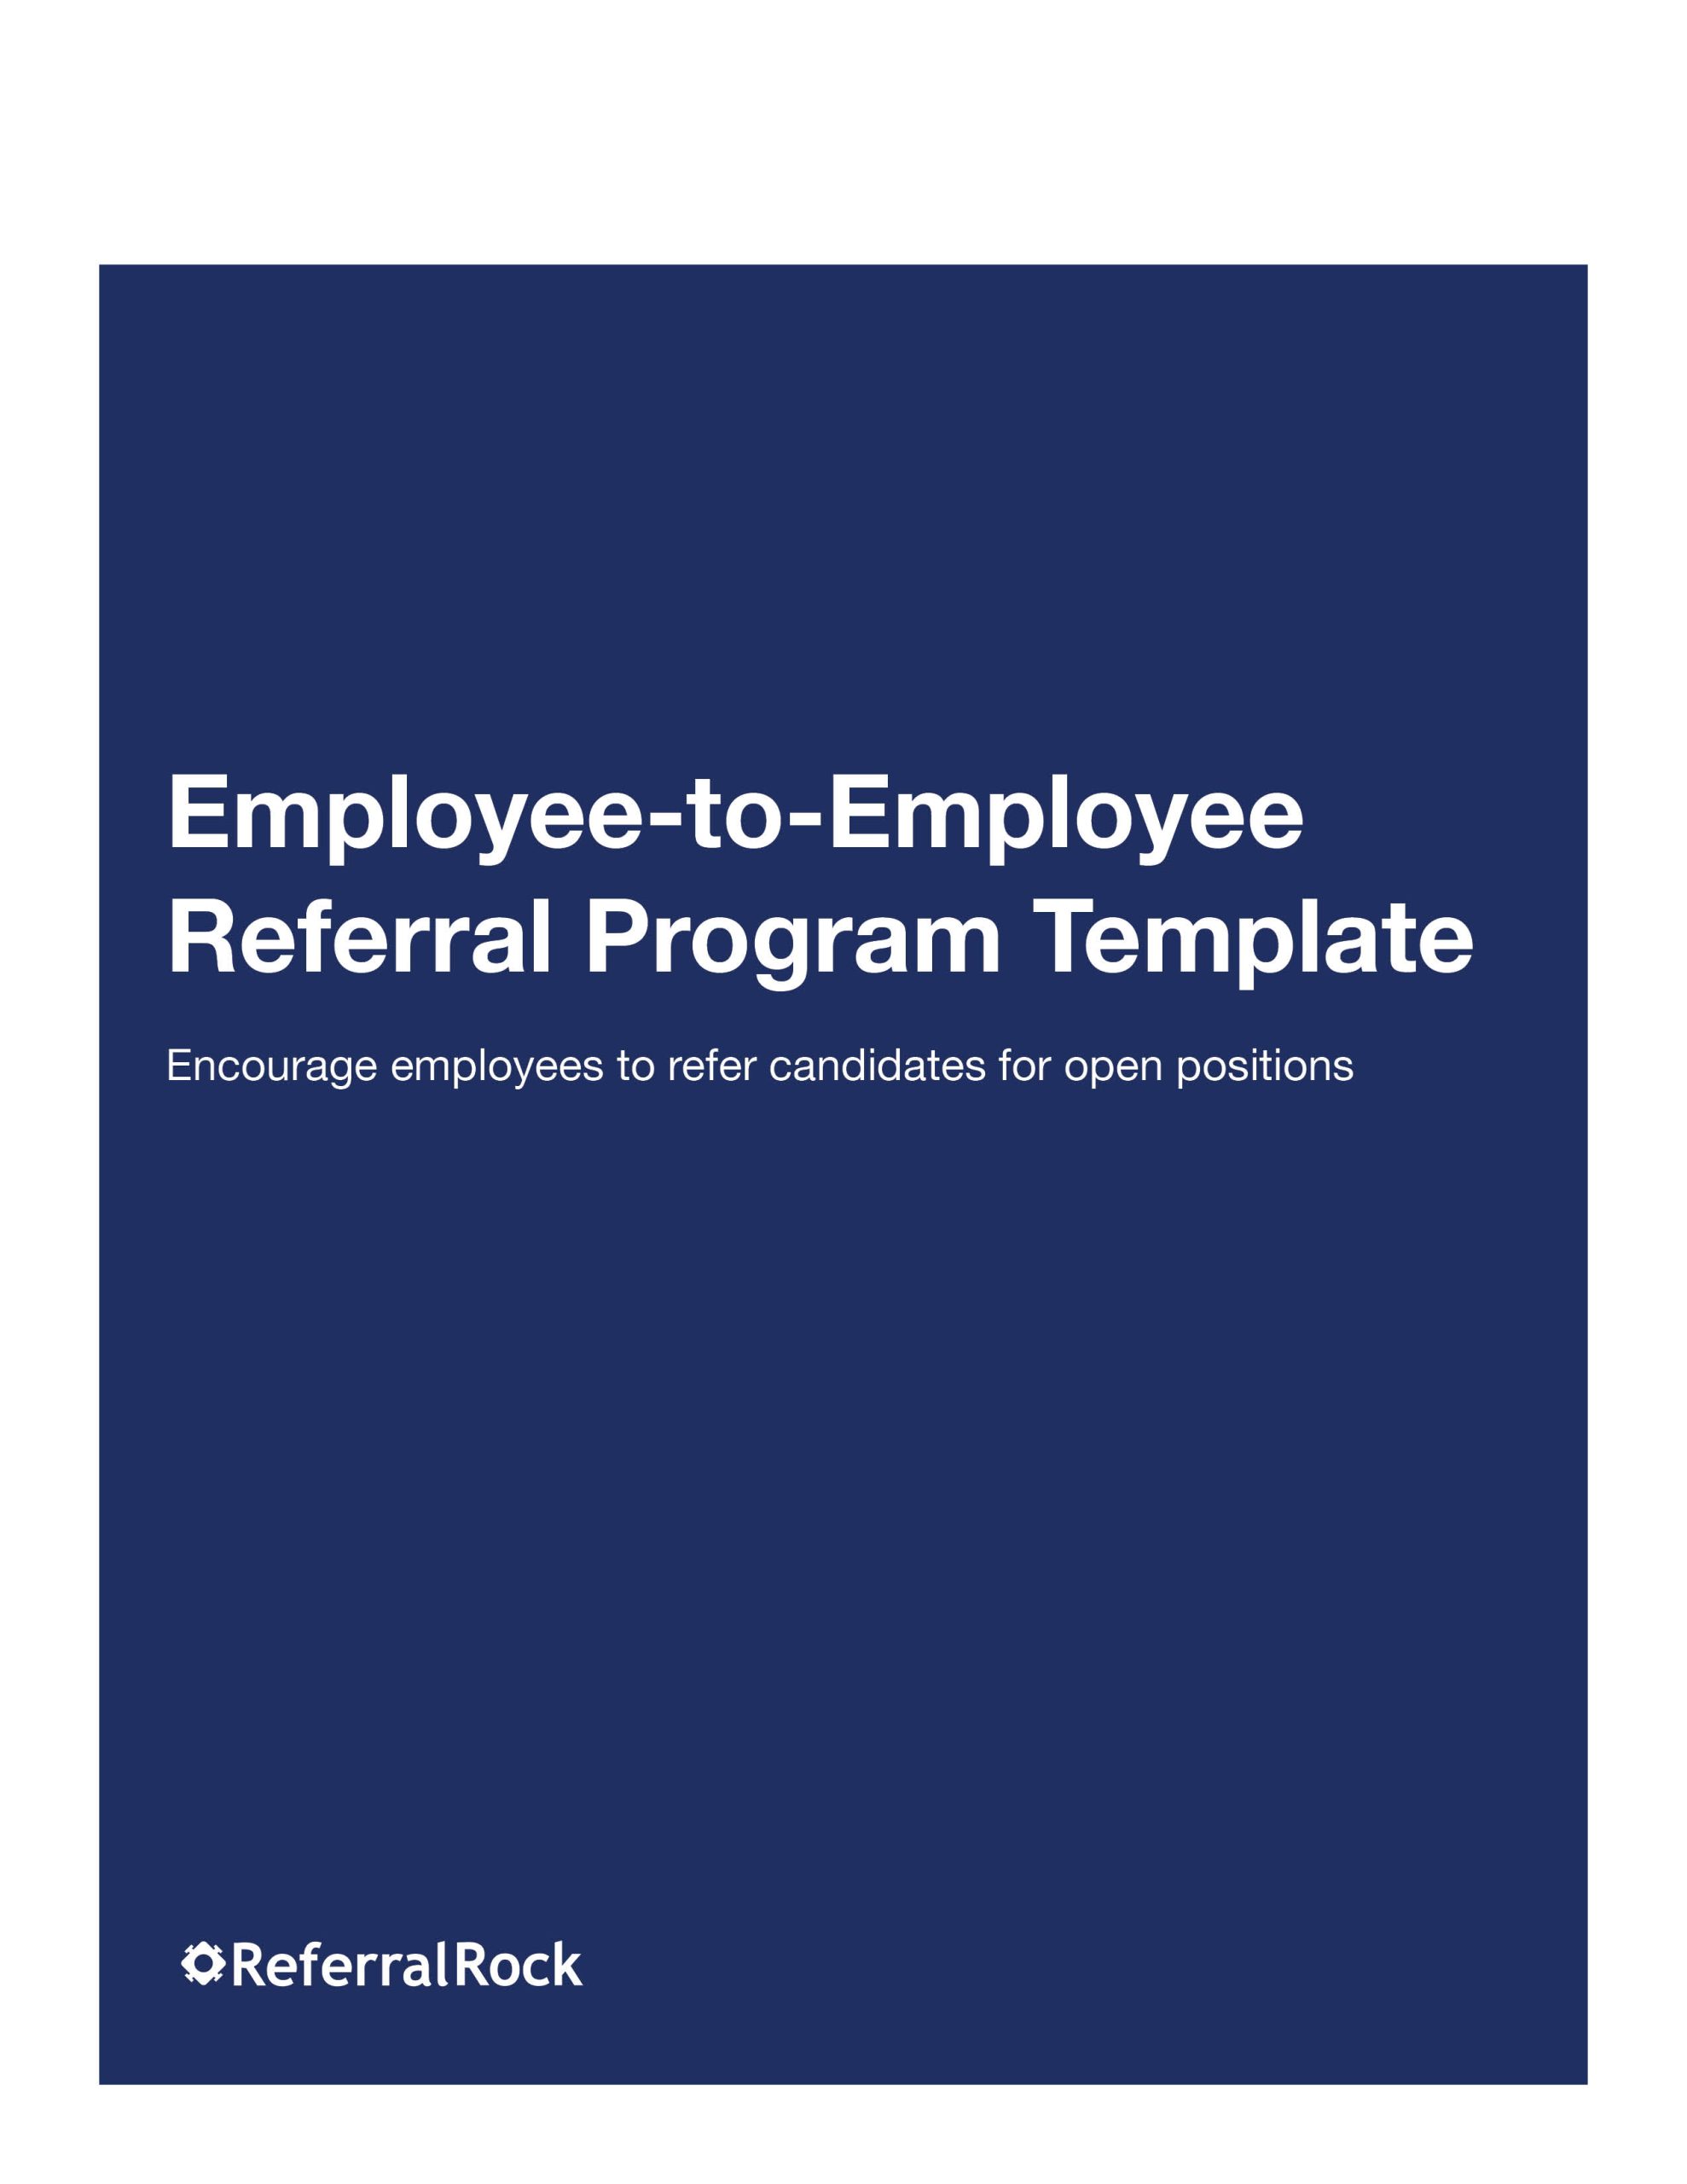 employee referral program template (employee to employee)